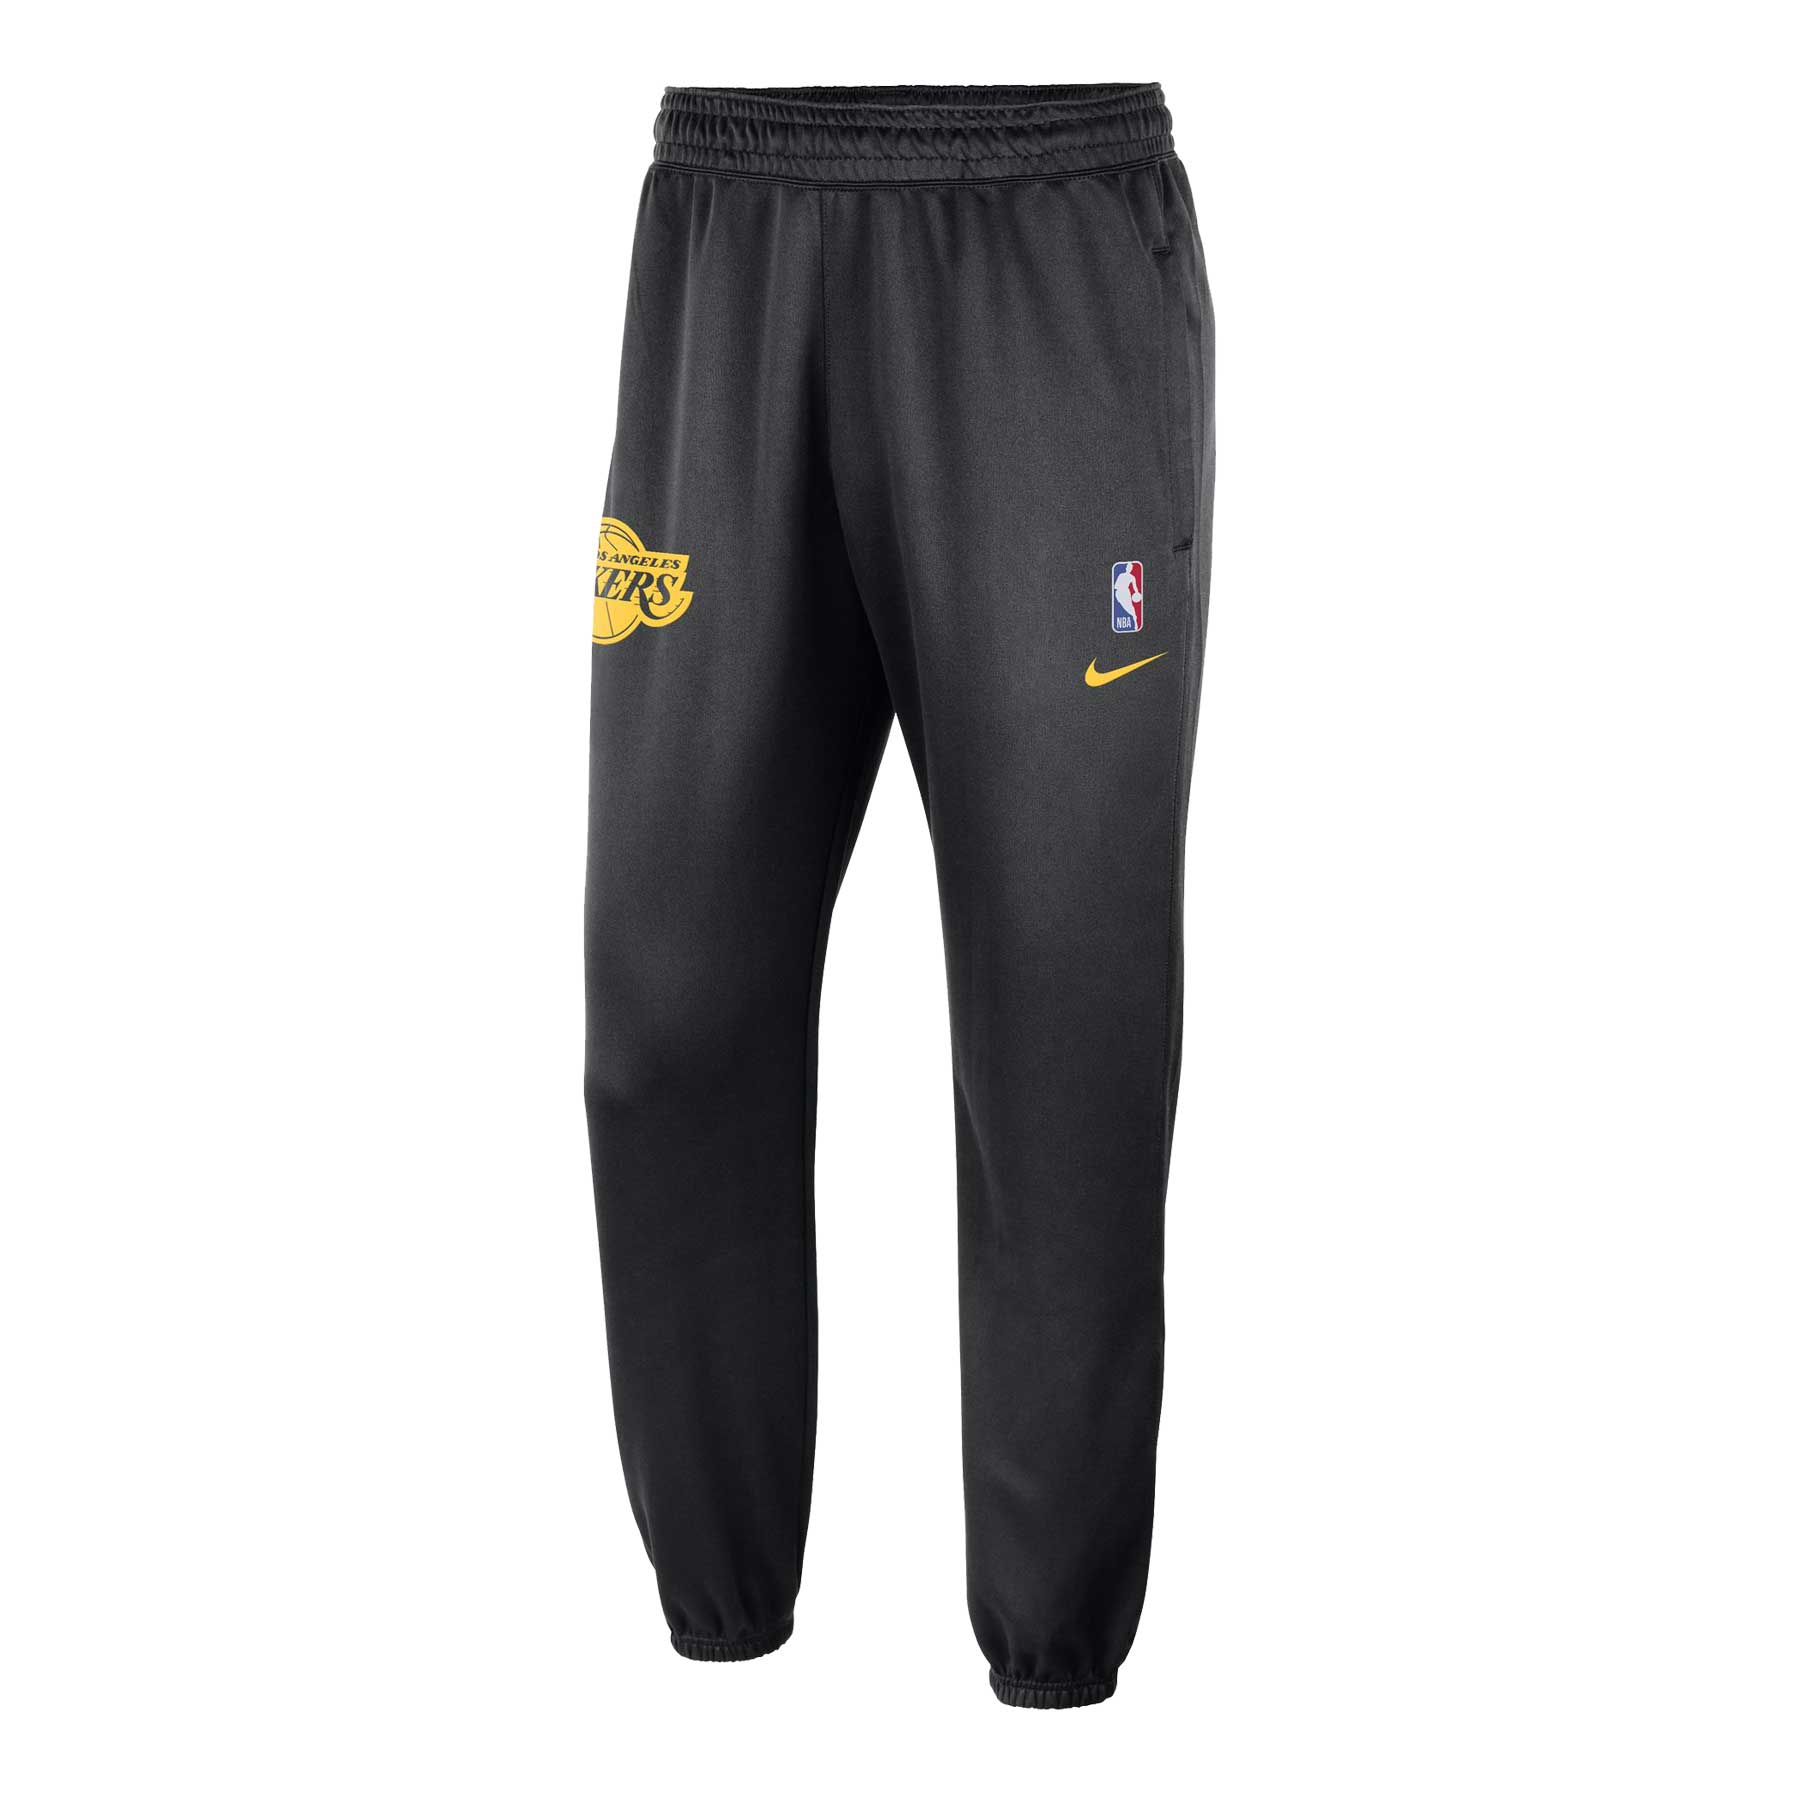 Pantalone Df Sptlight Lakers